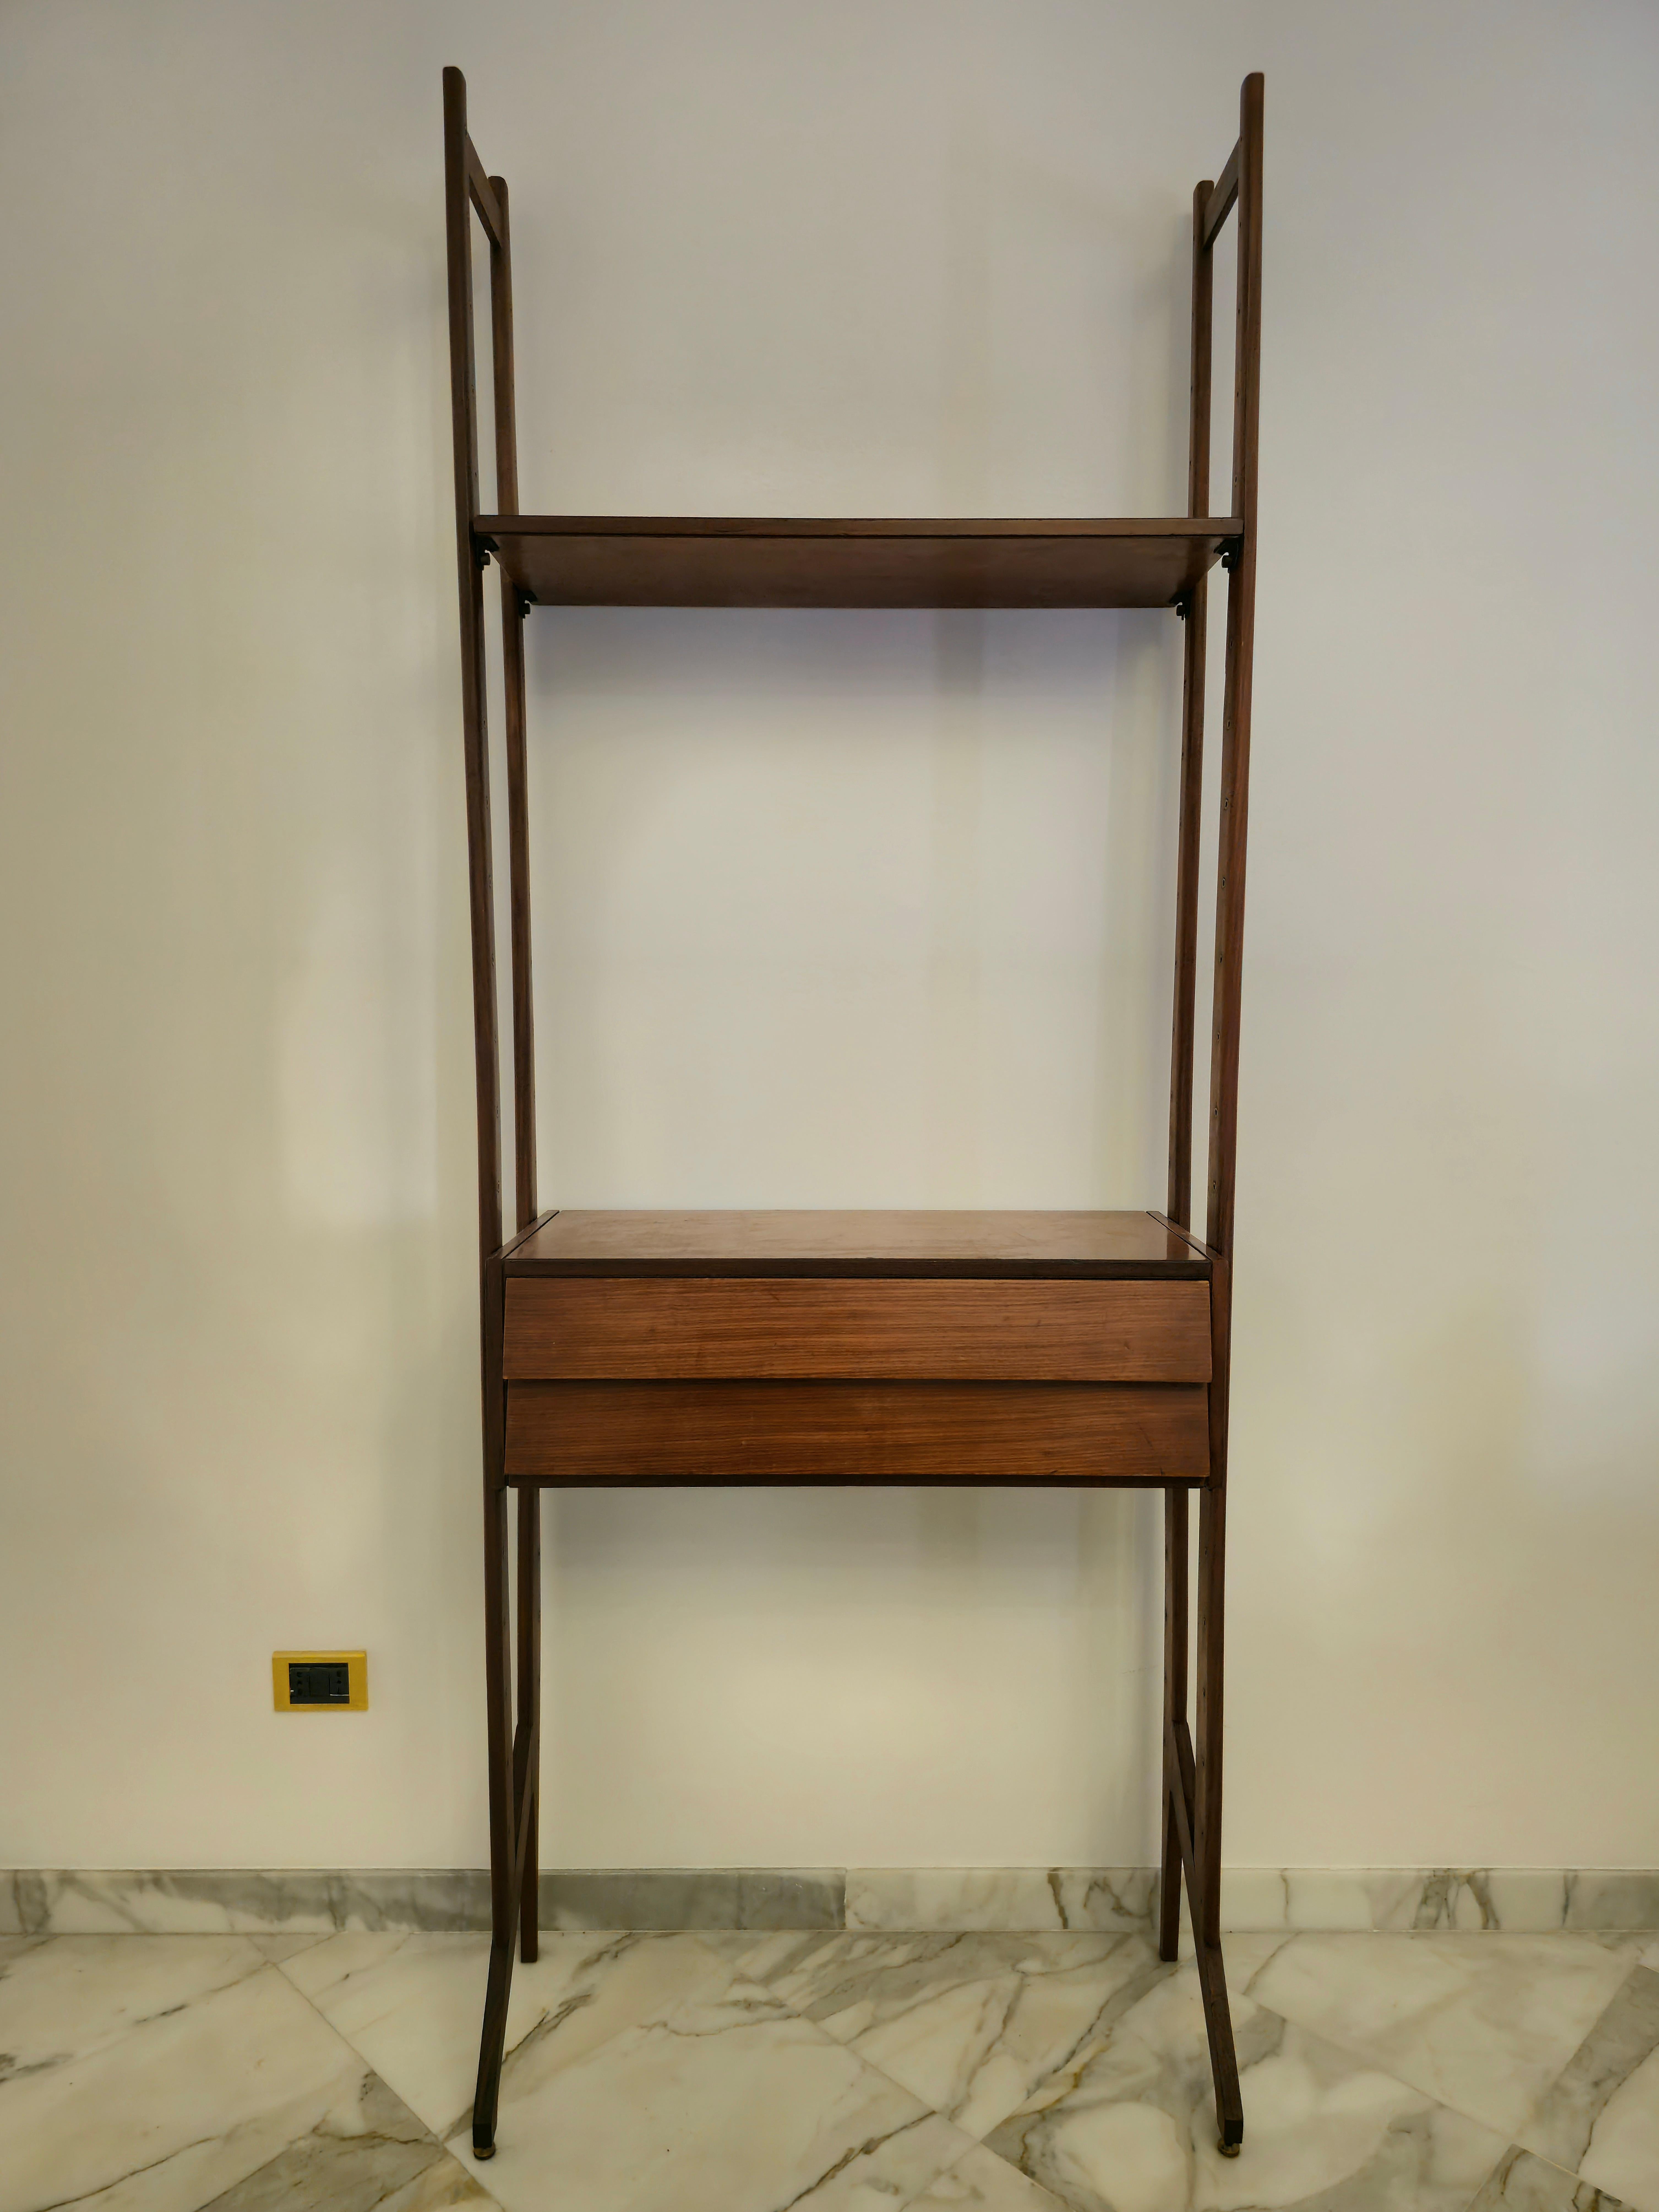 Bookcase Wood Modular Shelves Drawers Midcentury Italian Design, 1960s For Sale 6